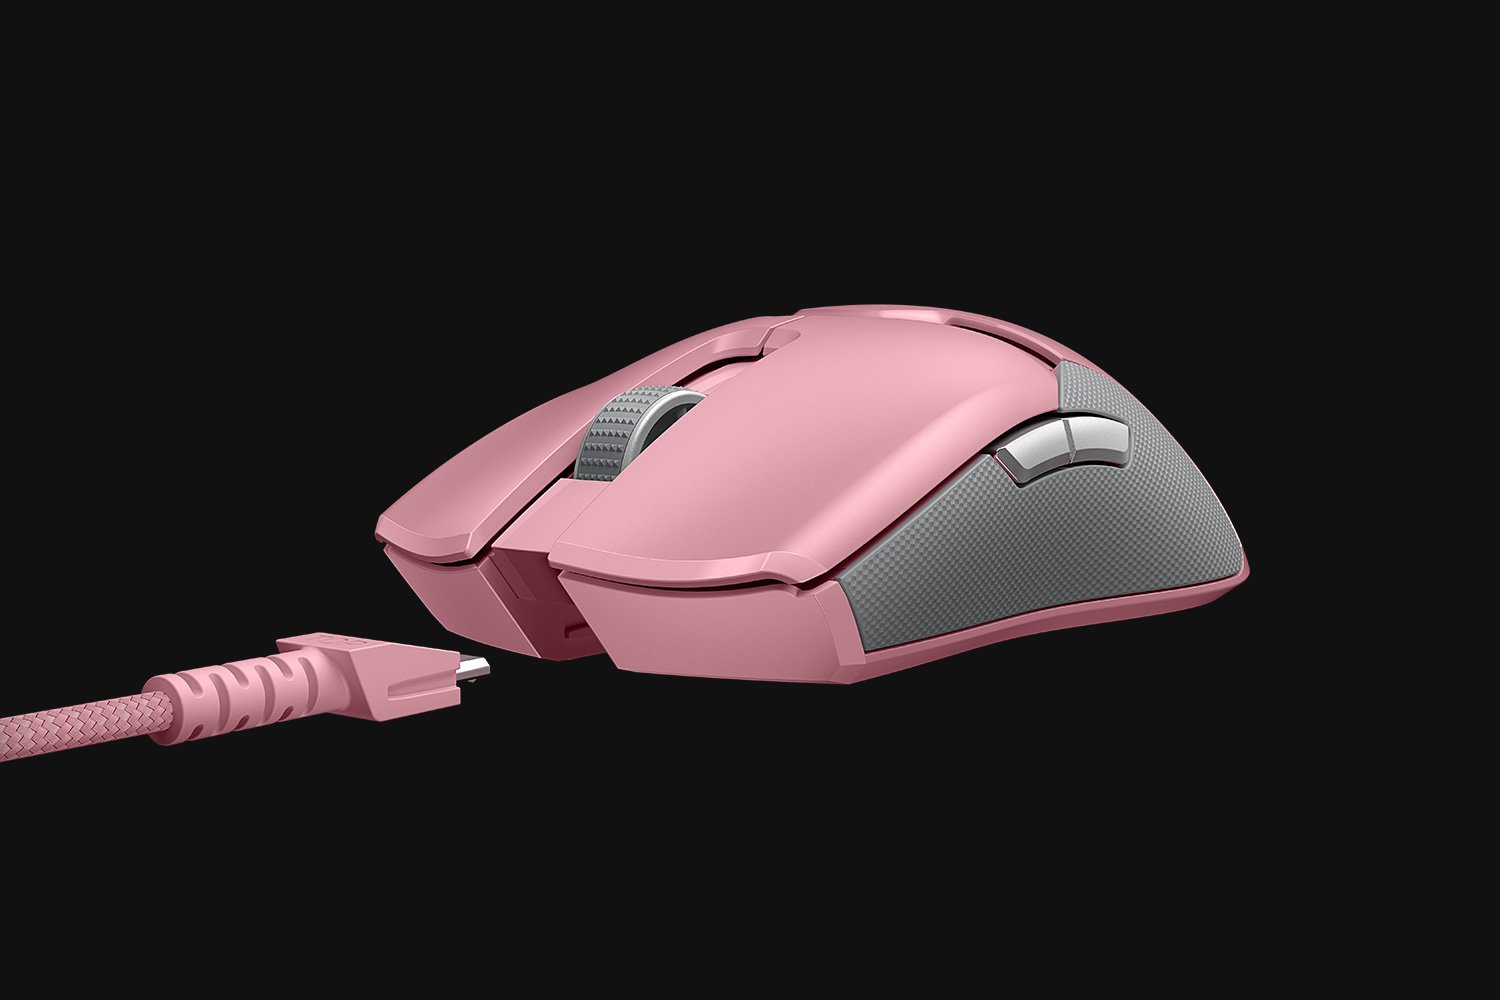 Razer Viper Ultimate Wireless Gaming Mouse Lazada Ph